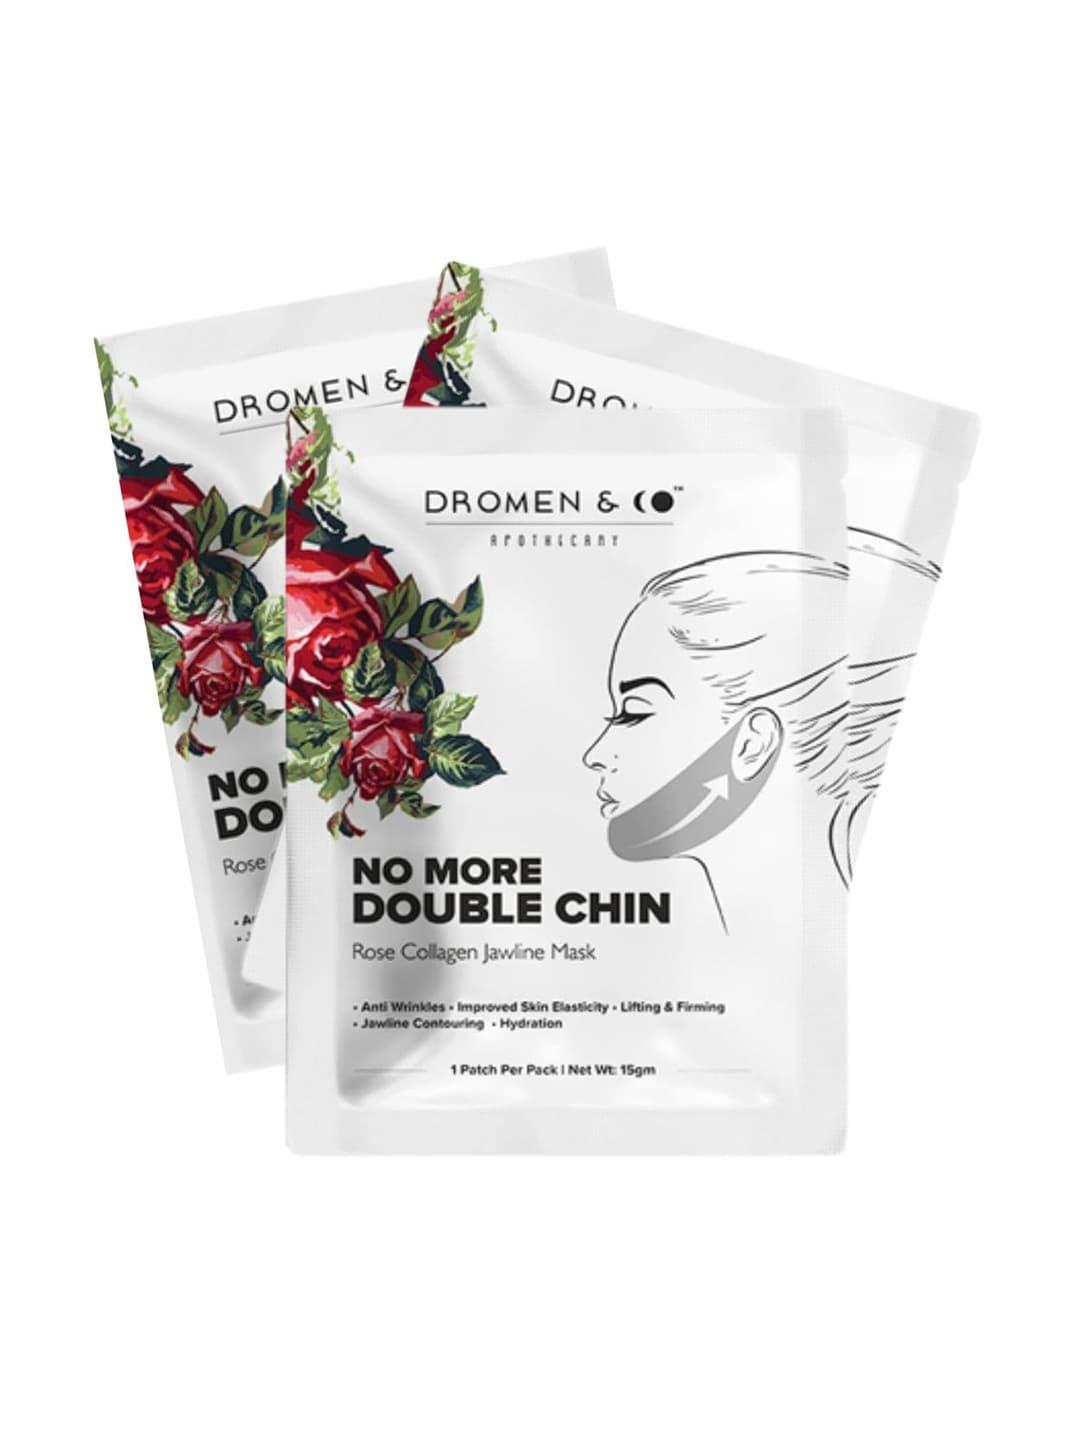 dromen & co set of 3 rose collagen v-shaped jawline slimming mask for double chin-15g each